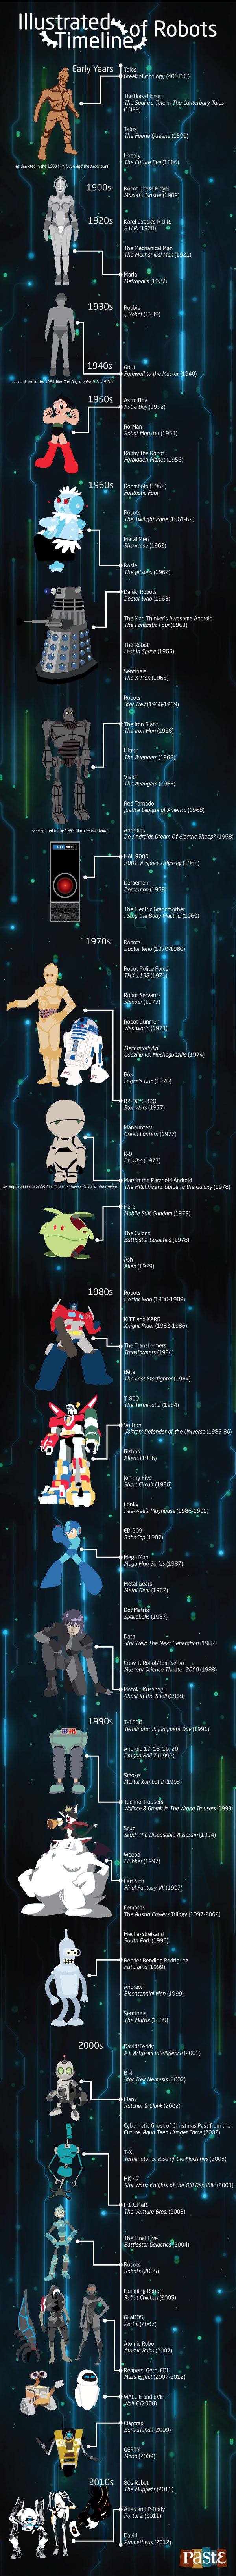 Robot-Timeline-liste-infographic-infographie [600 x 6546]